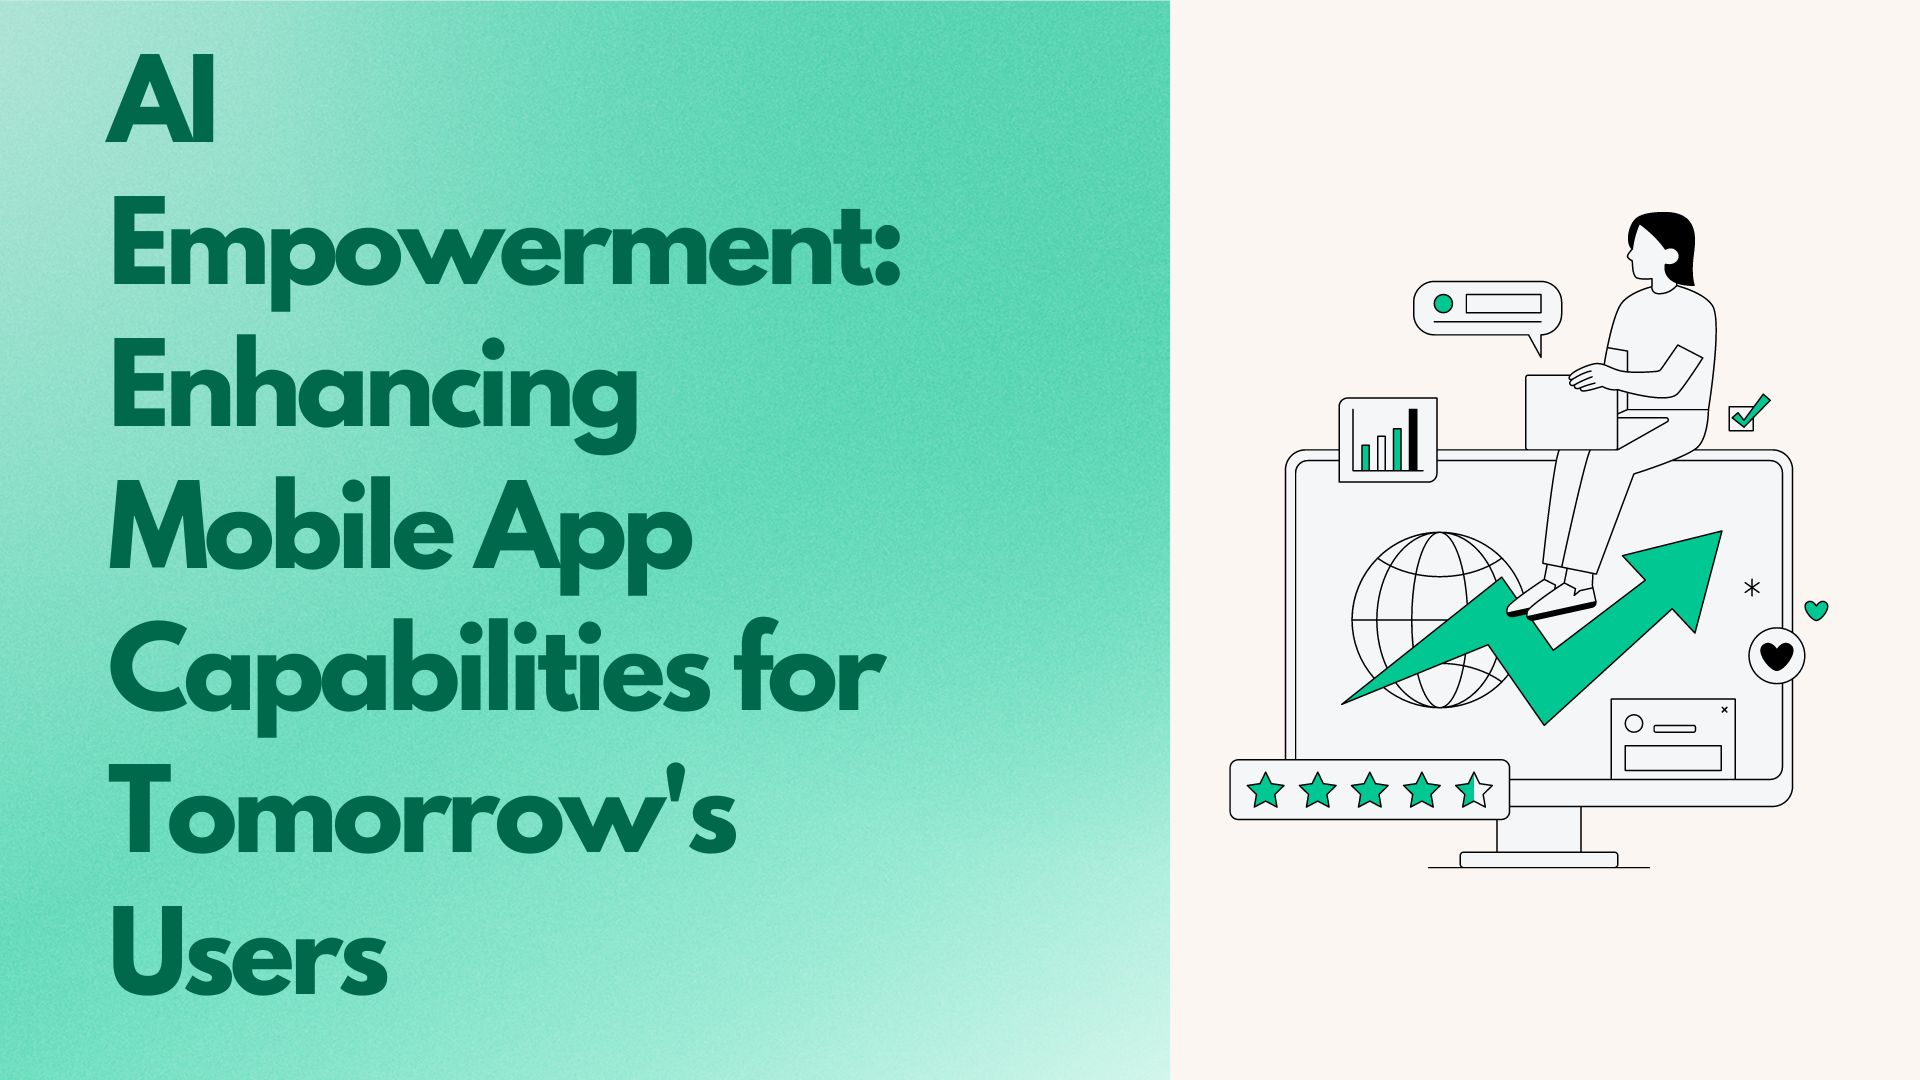 AI Empowerment: Enhancing Mobile App Capabilities for Tomorrow’s Users